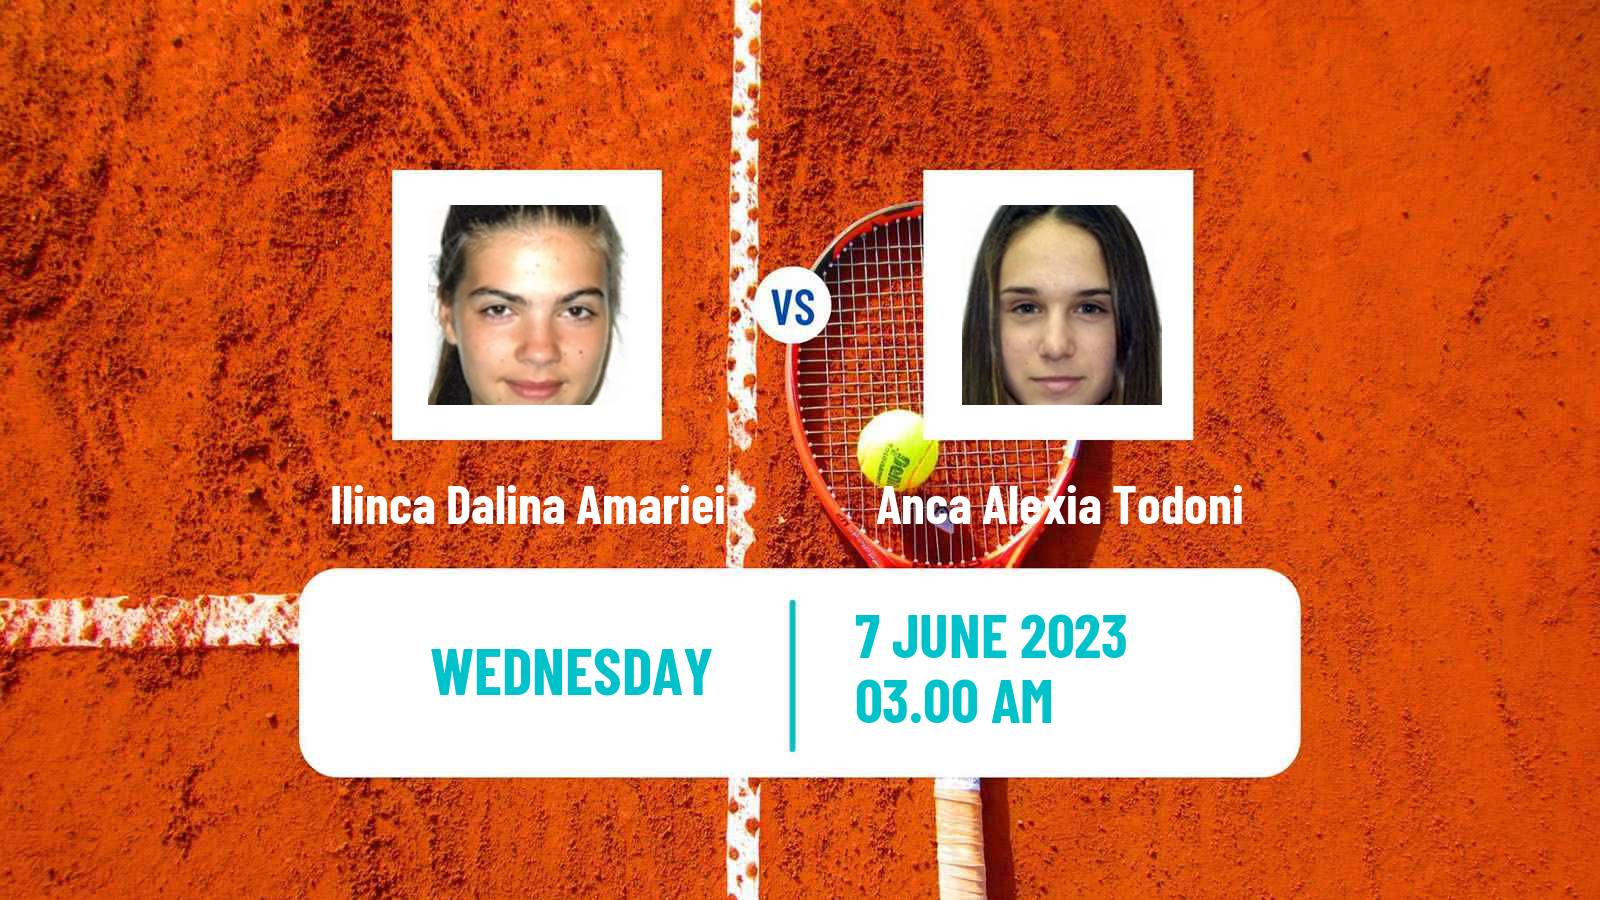 Tennis ITF W25 Kursumlijska Banja 2 Women Ilinca Dalina Amariei - Anca Alexia Todoni